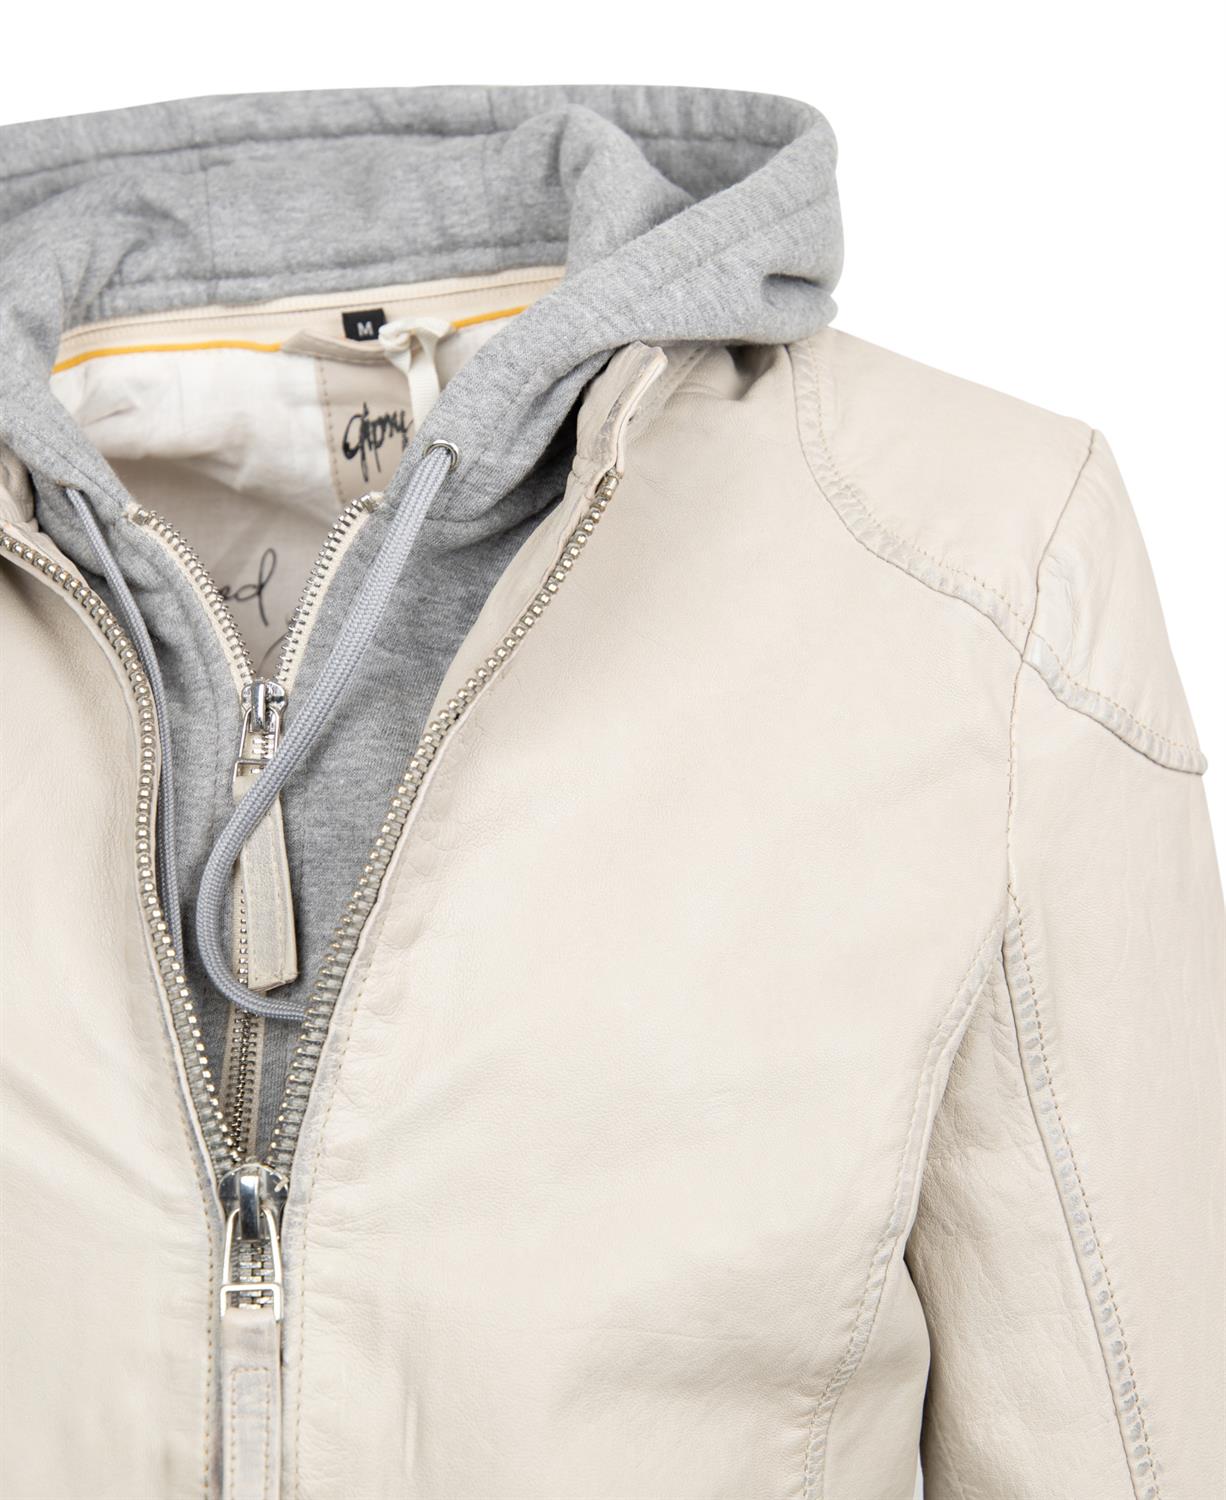 Gipsy Damen Jacke kurz Lederjacke mit abnehmbarer Kapuze beige bequem  online kaufen bei